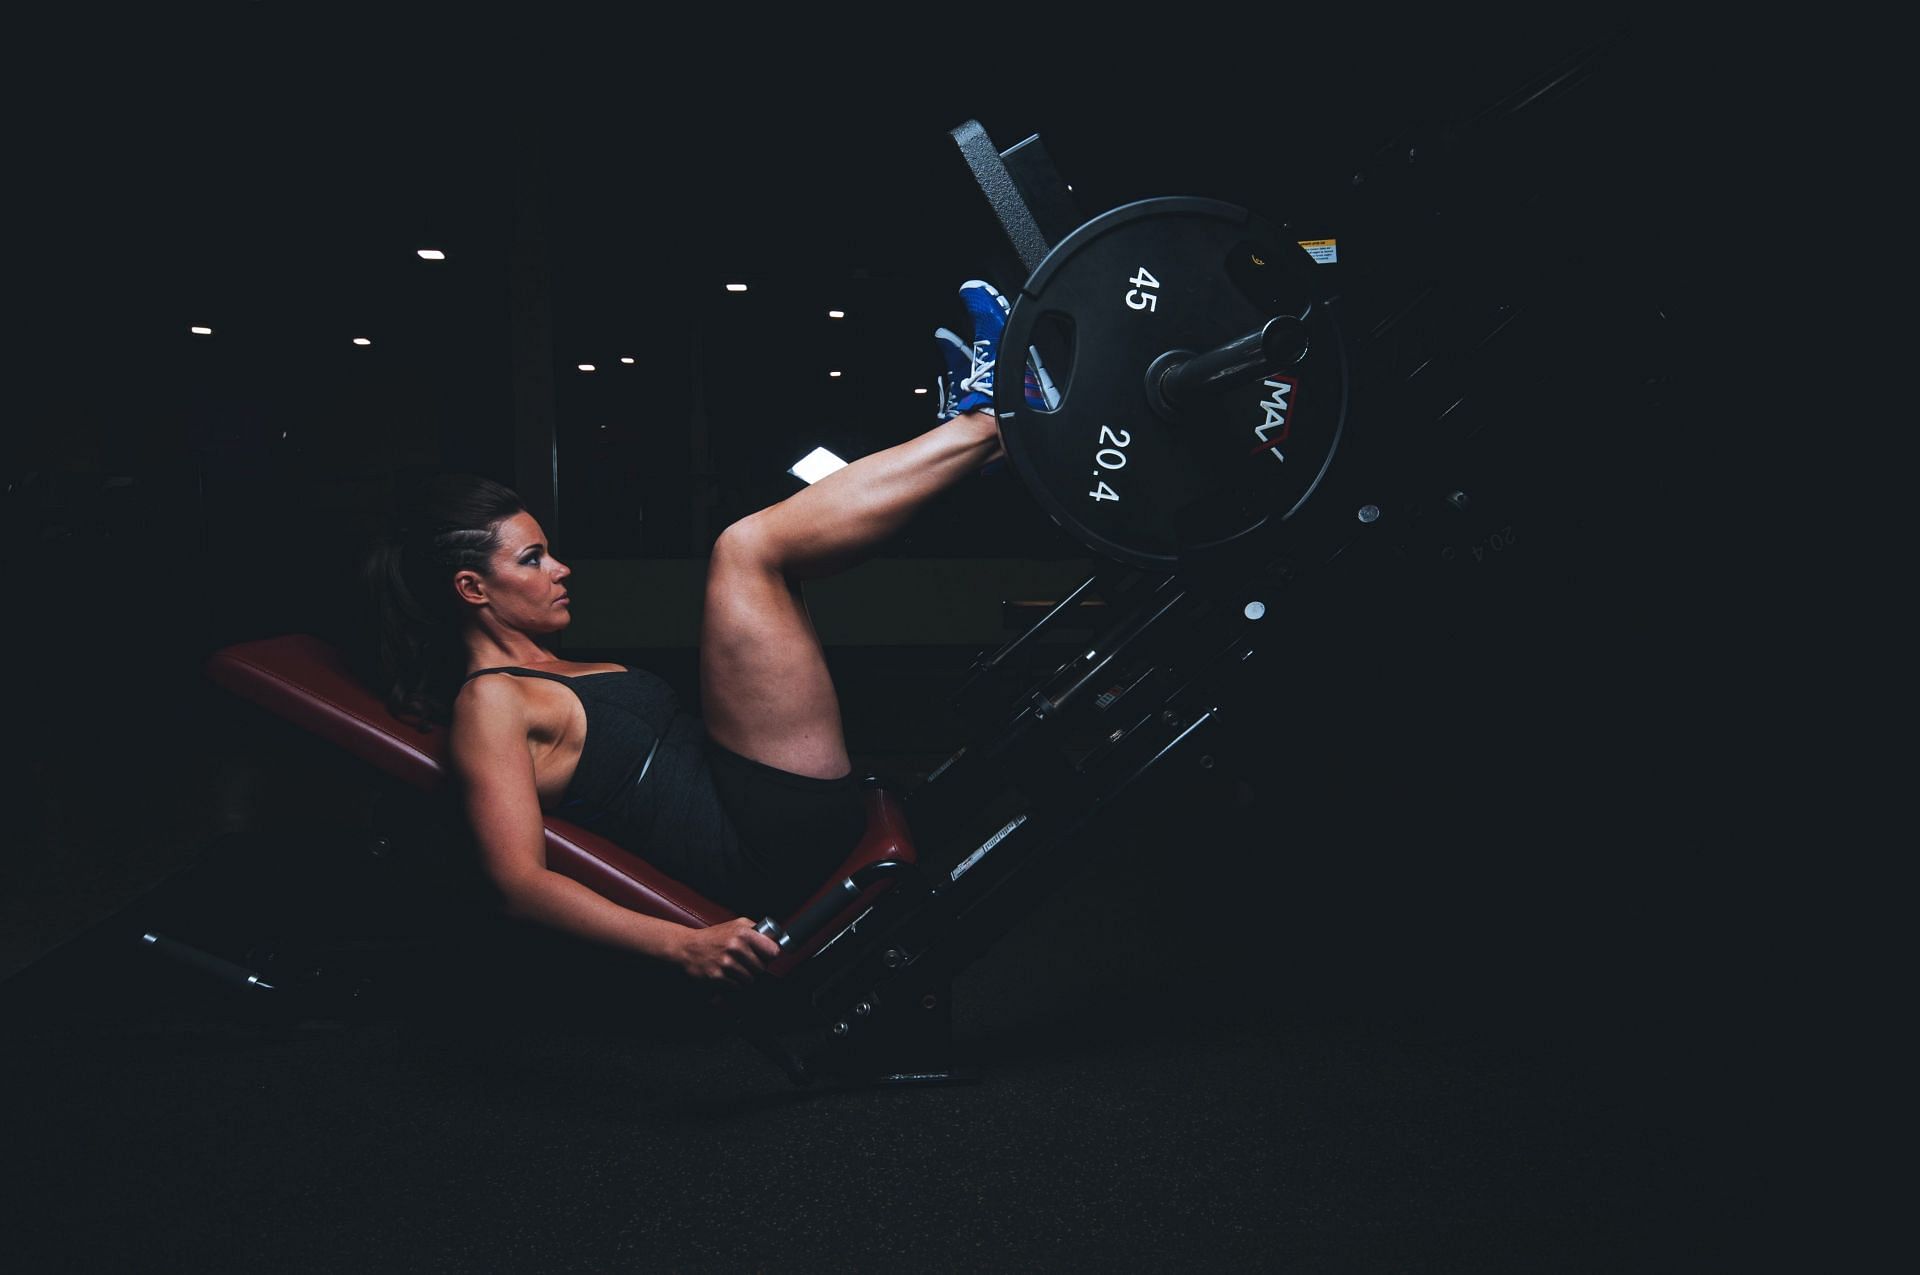 leg press is one of the most popular gym machines (Photo by Scott Webb on Unsplash)